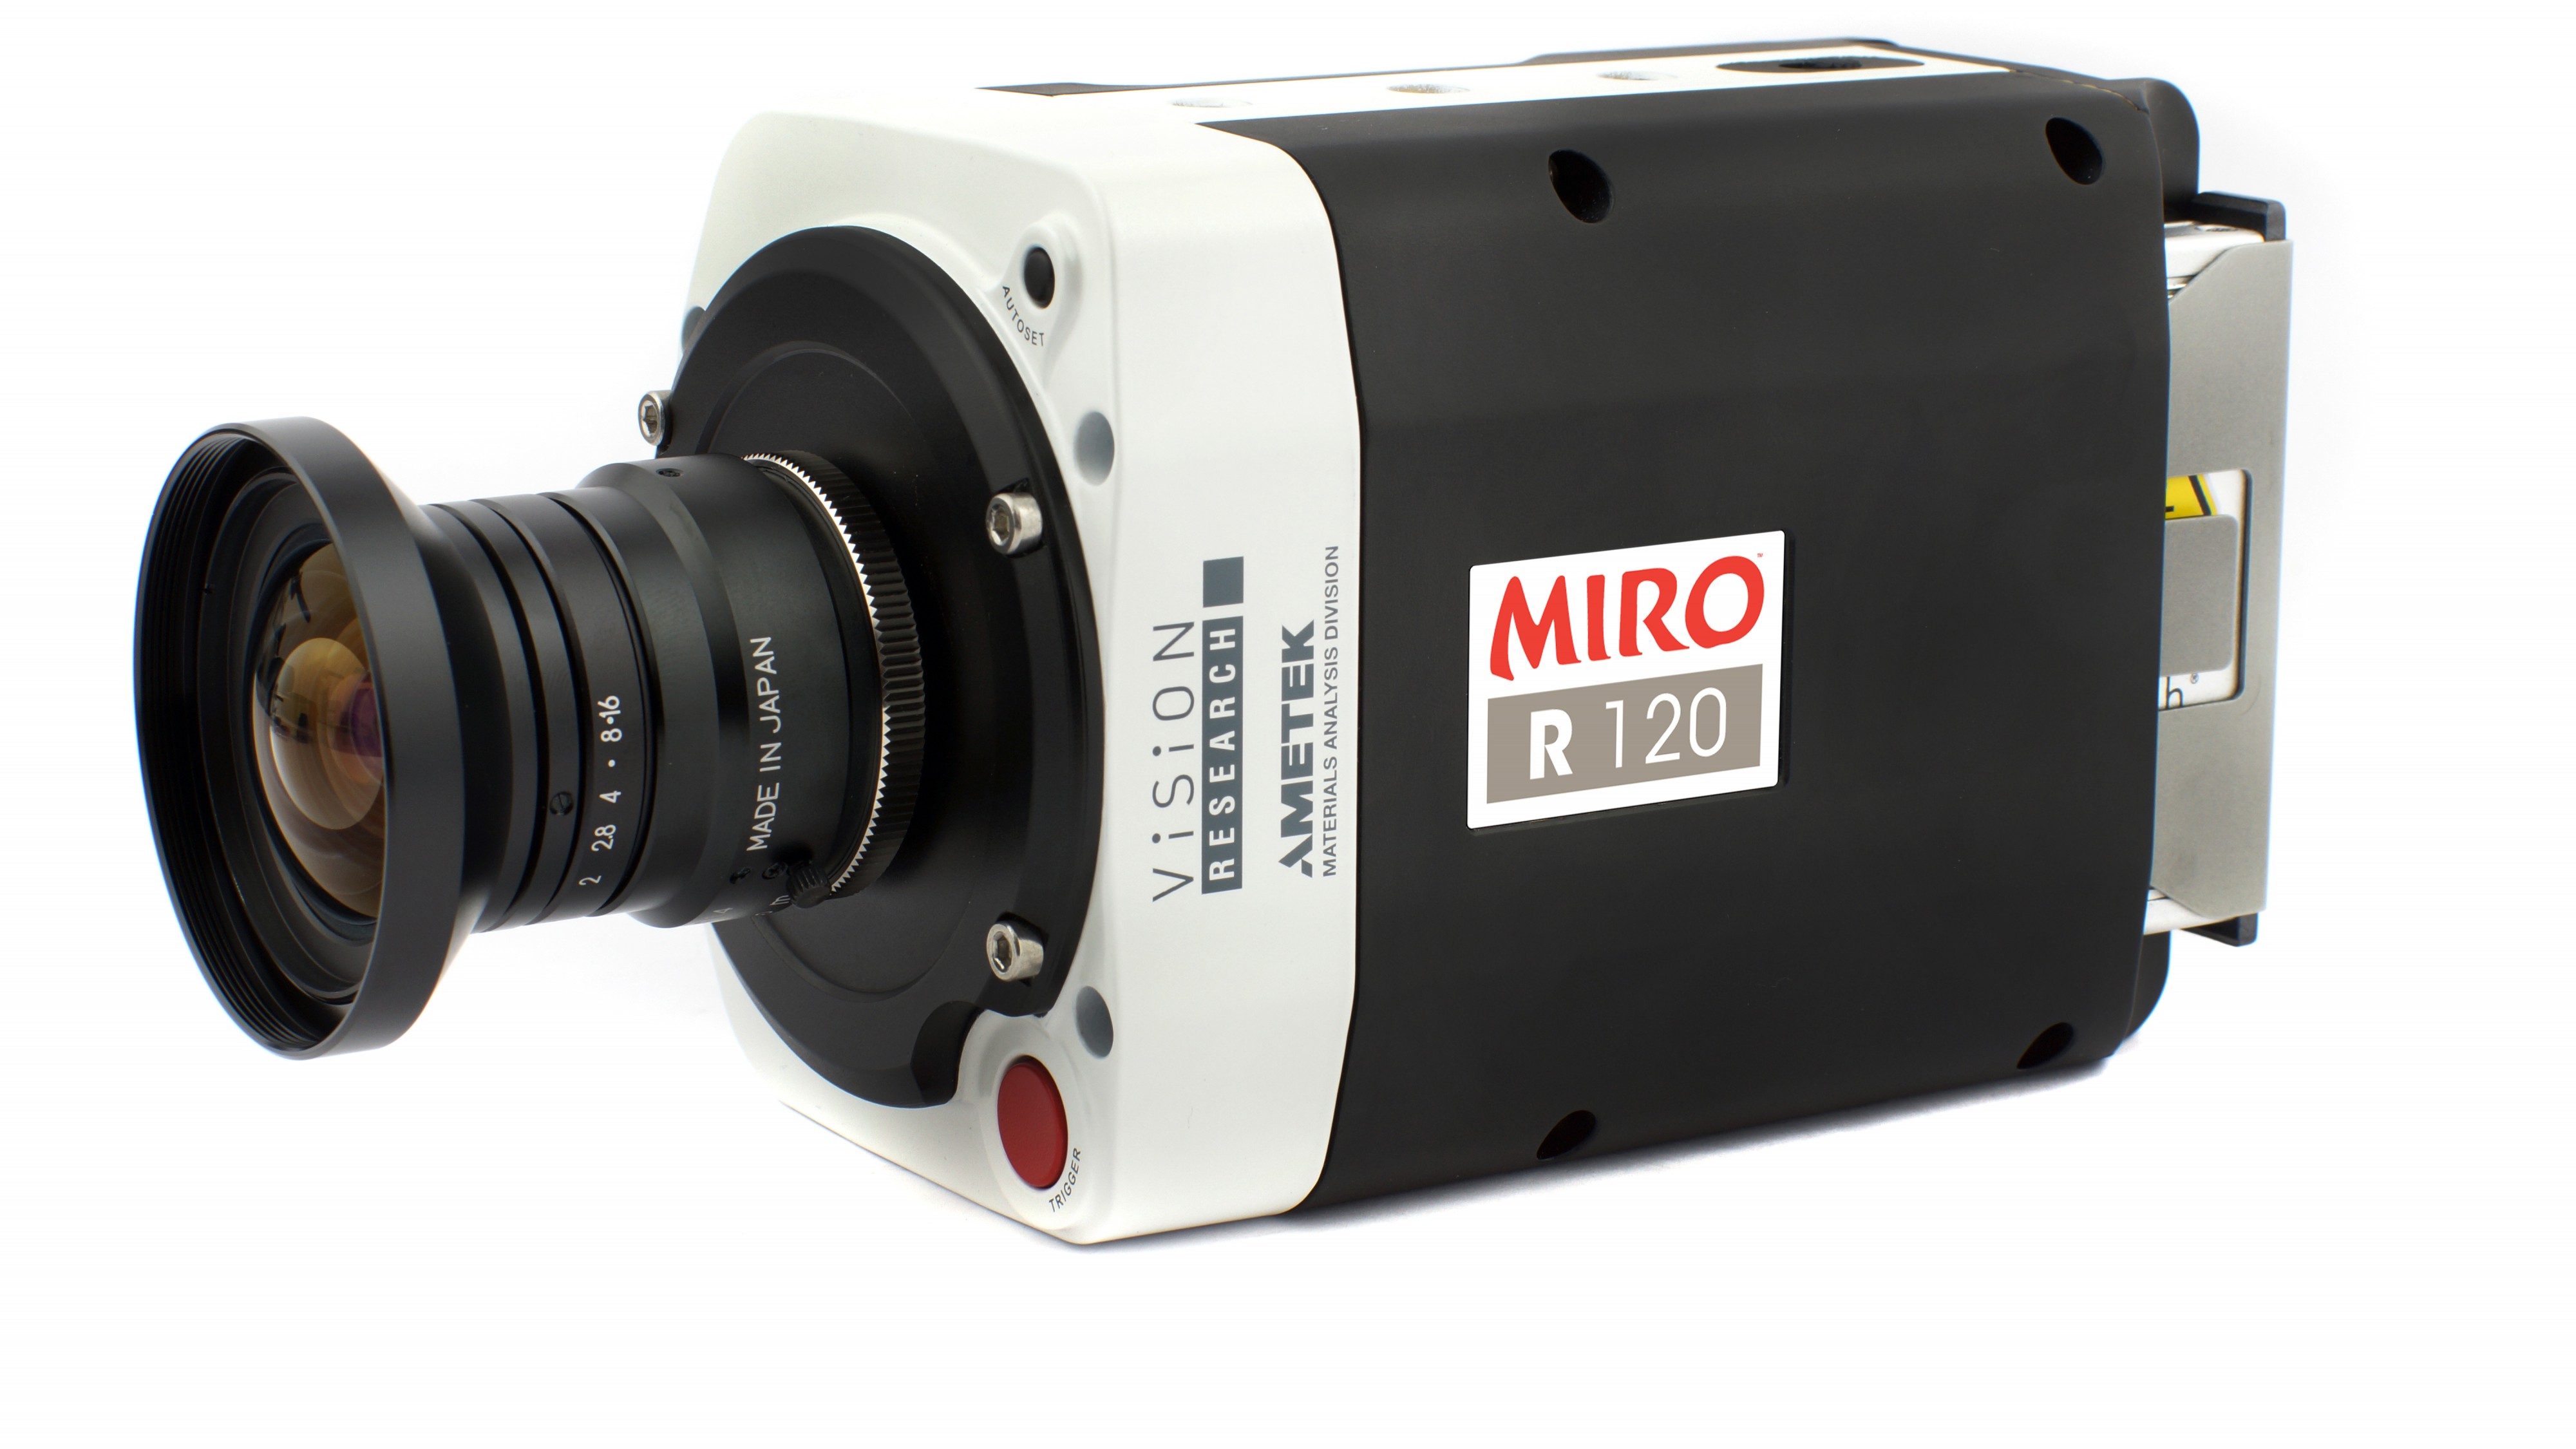 Phantom Miro R120 Digital High-Speed Camera